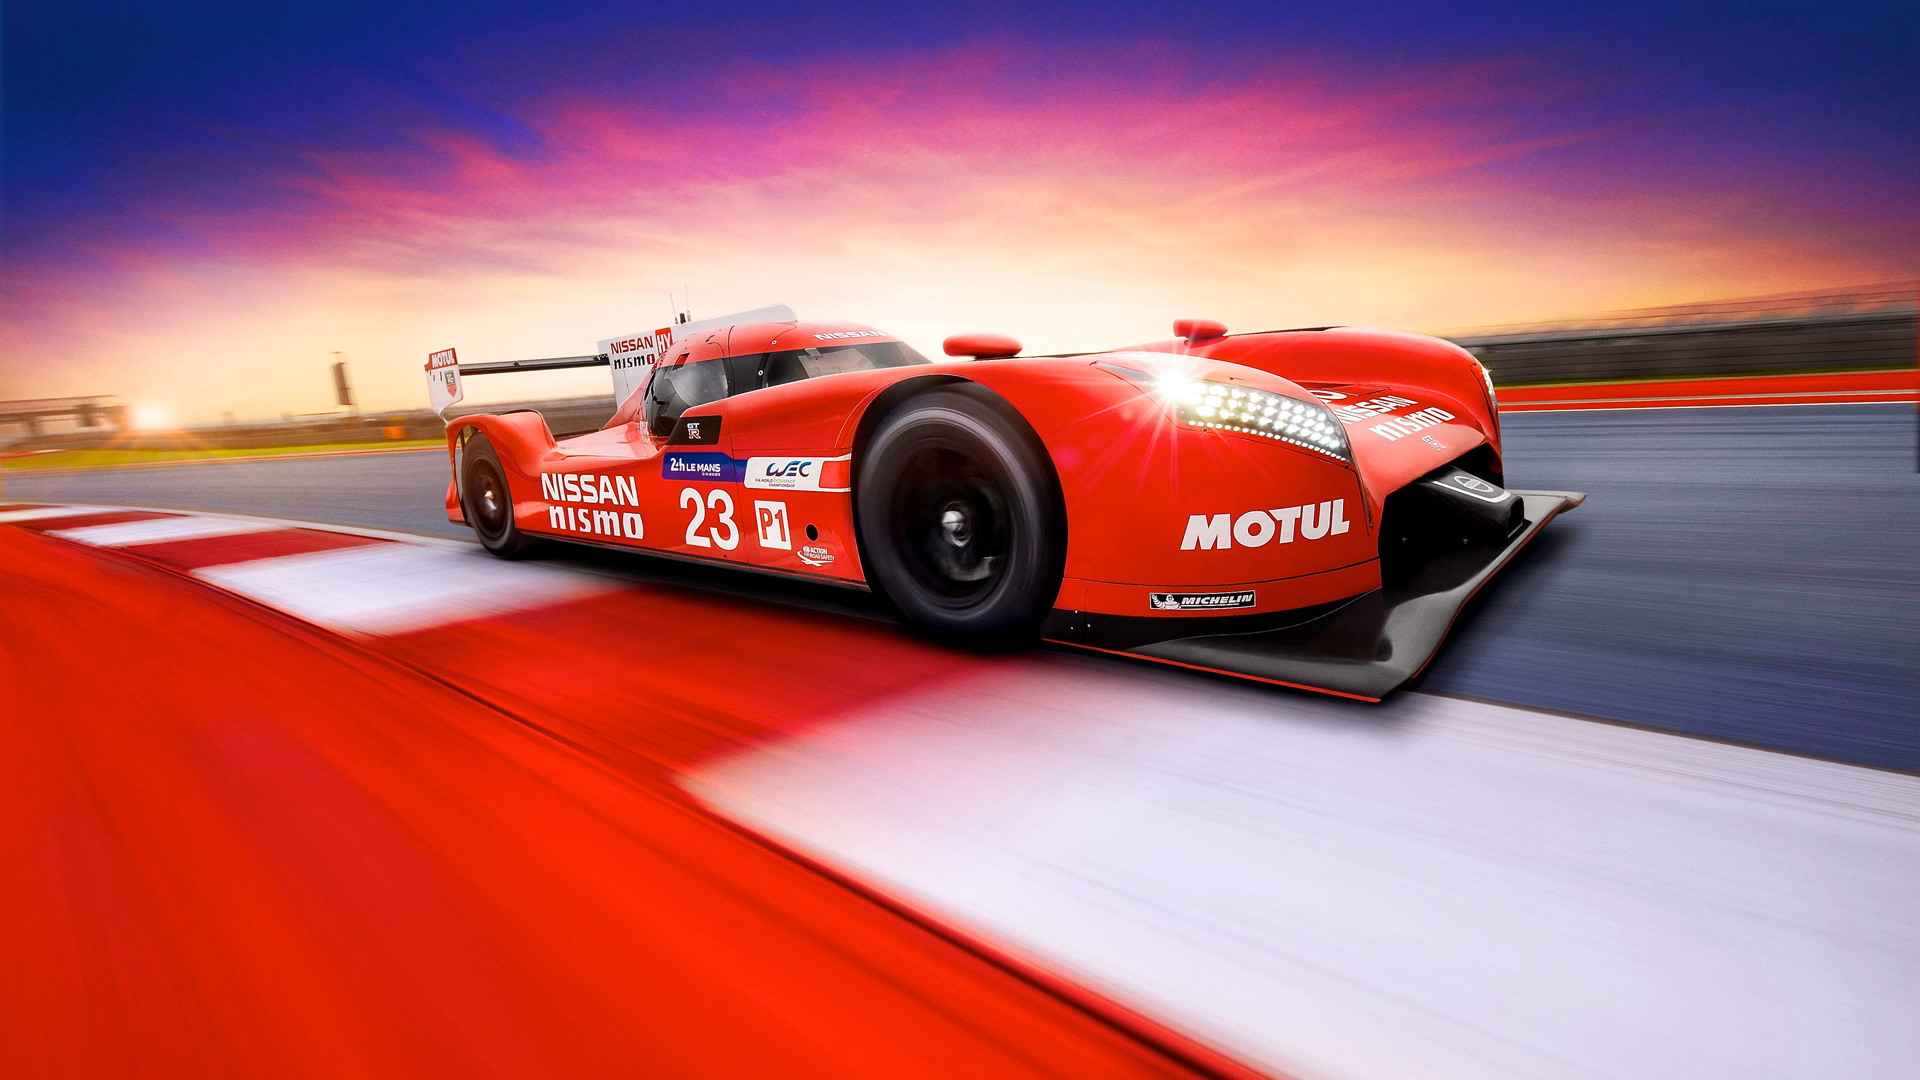 2015 Nissan GT-R LM NISMO LMP1 race car